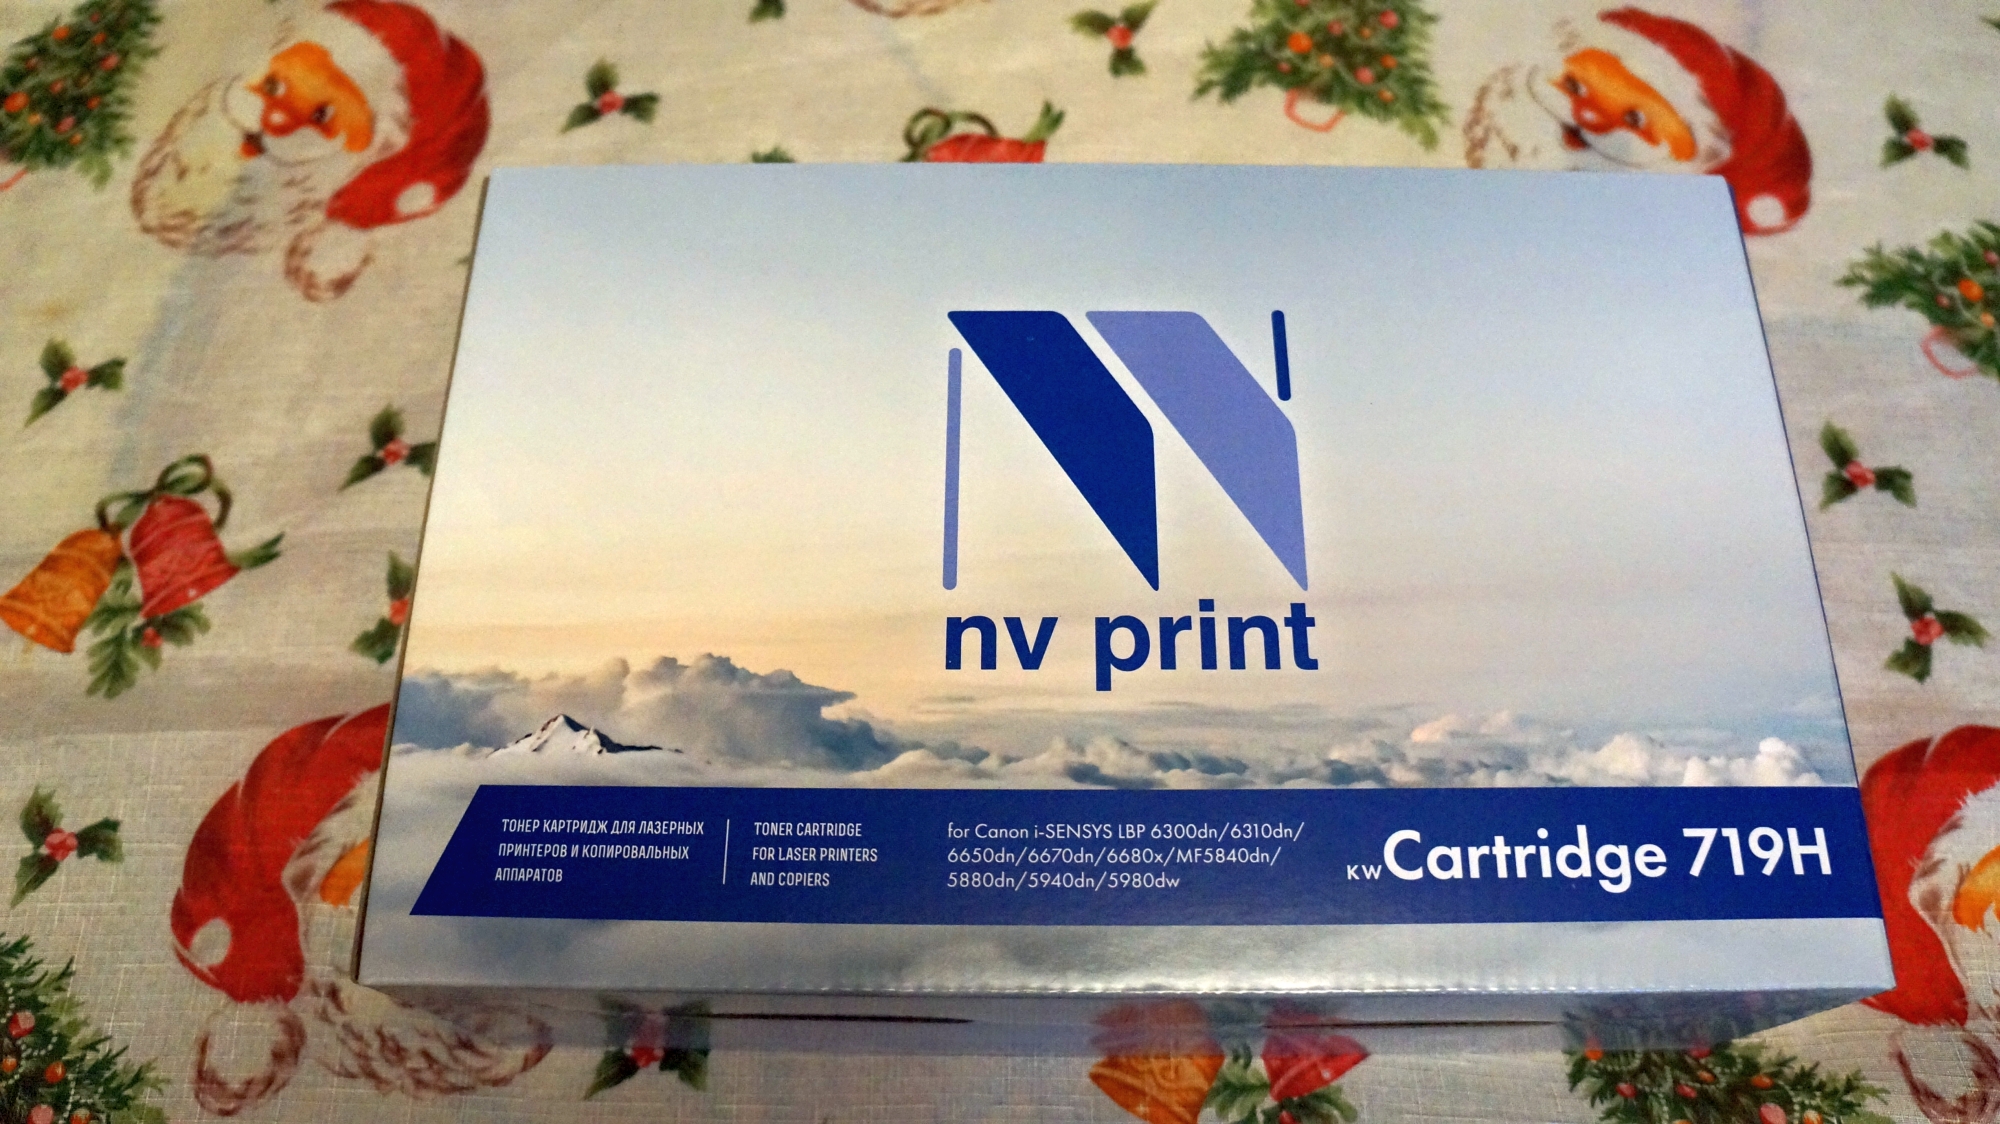 Картридж NV Print 719H лицевая сторона упаковки